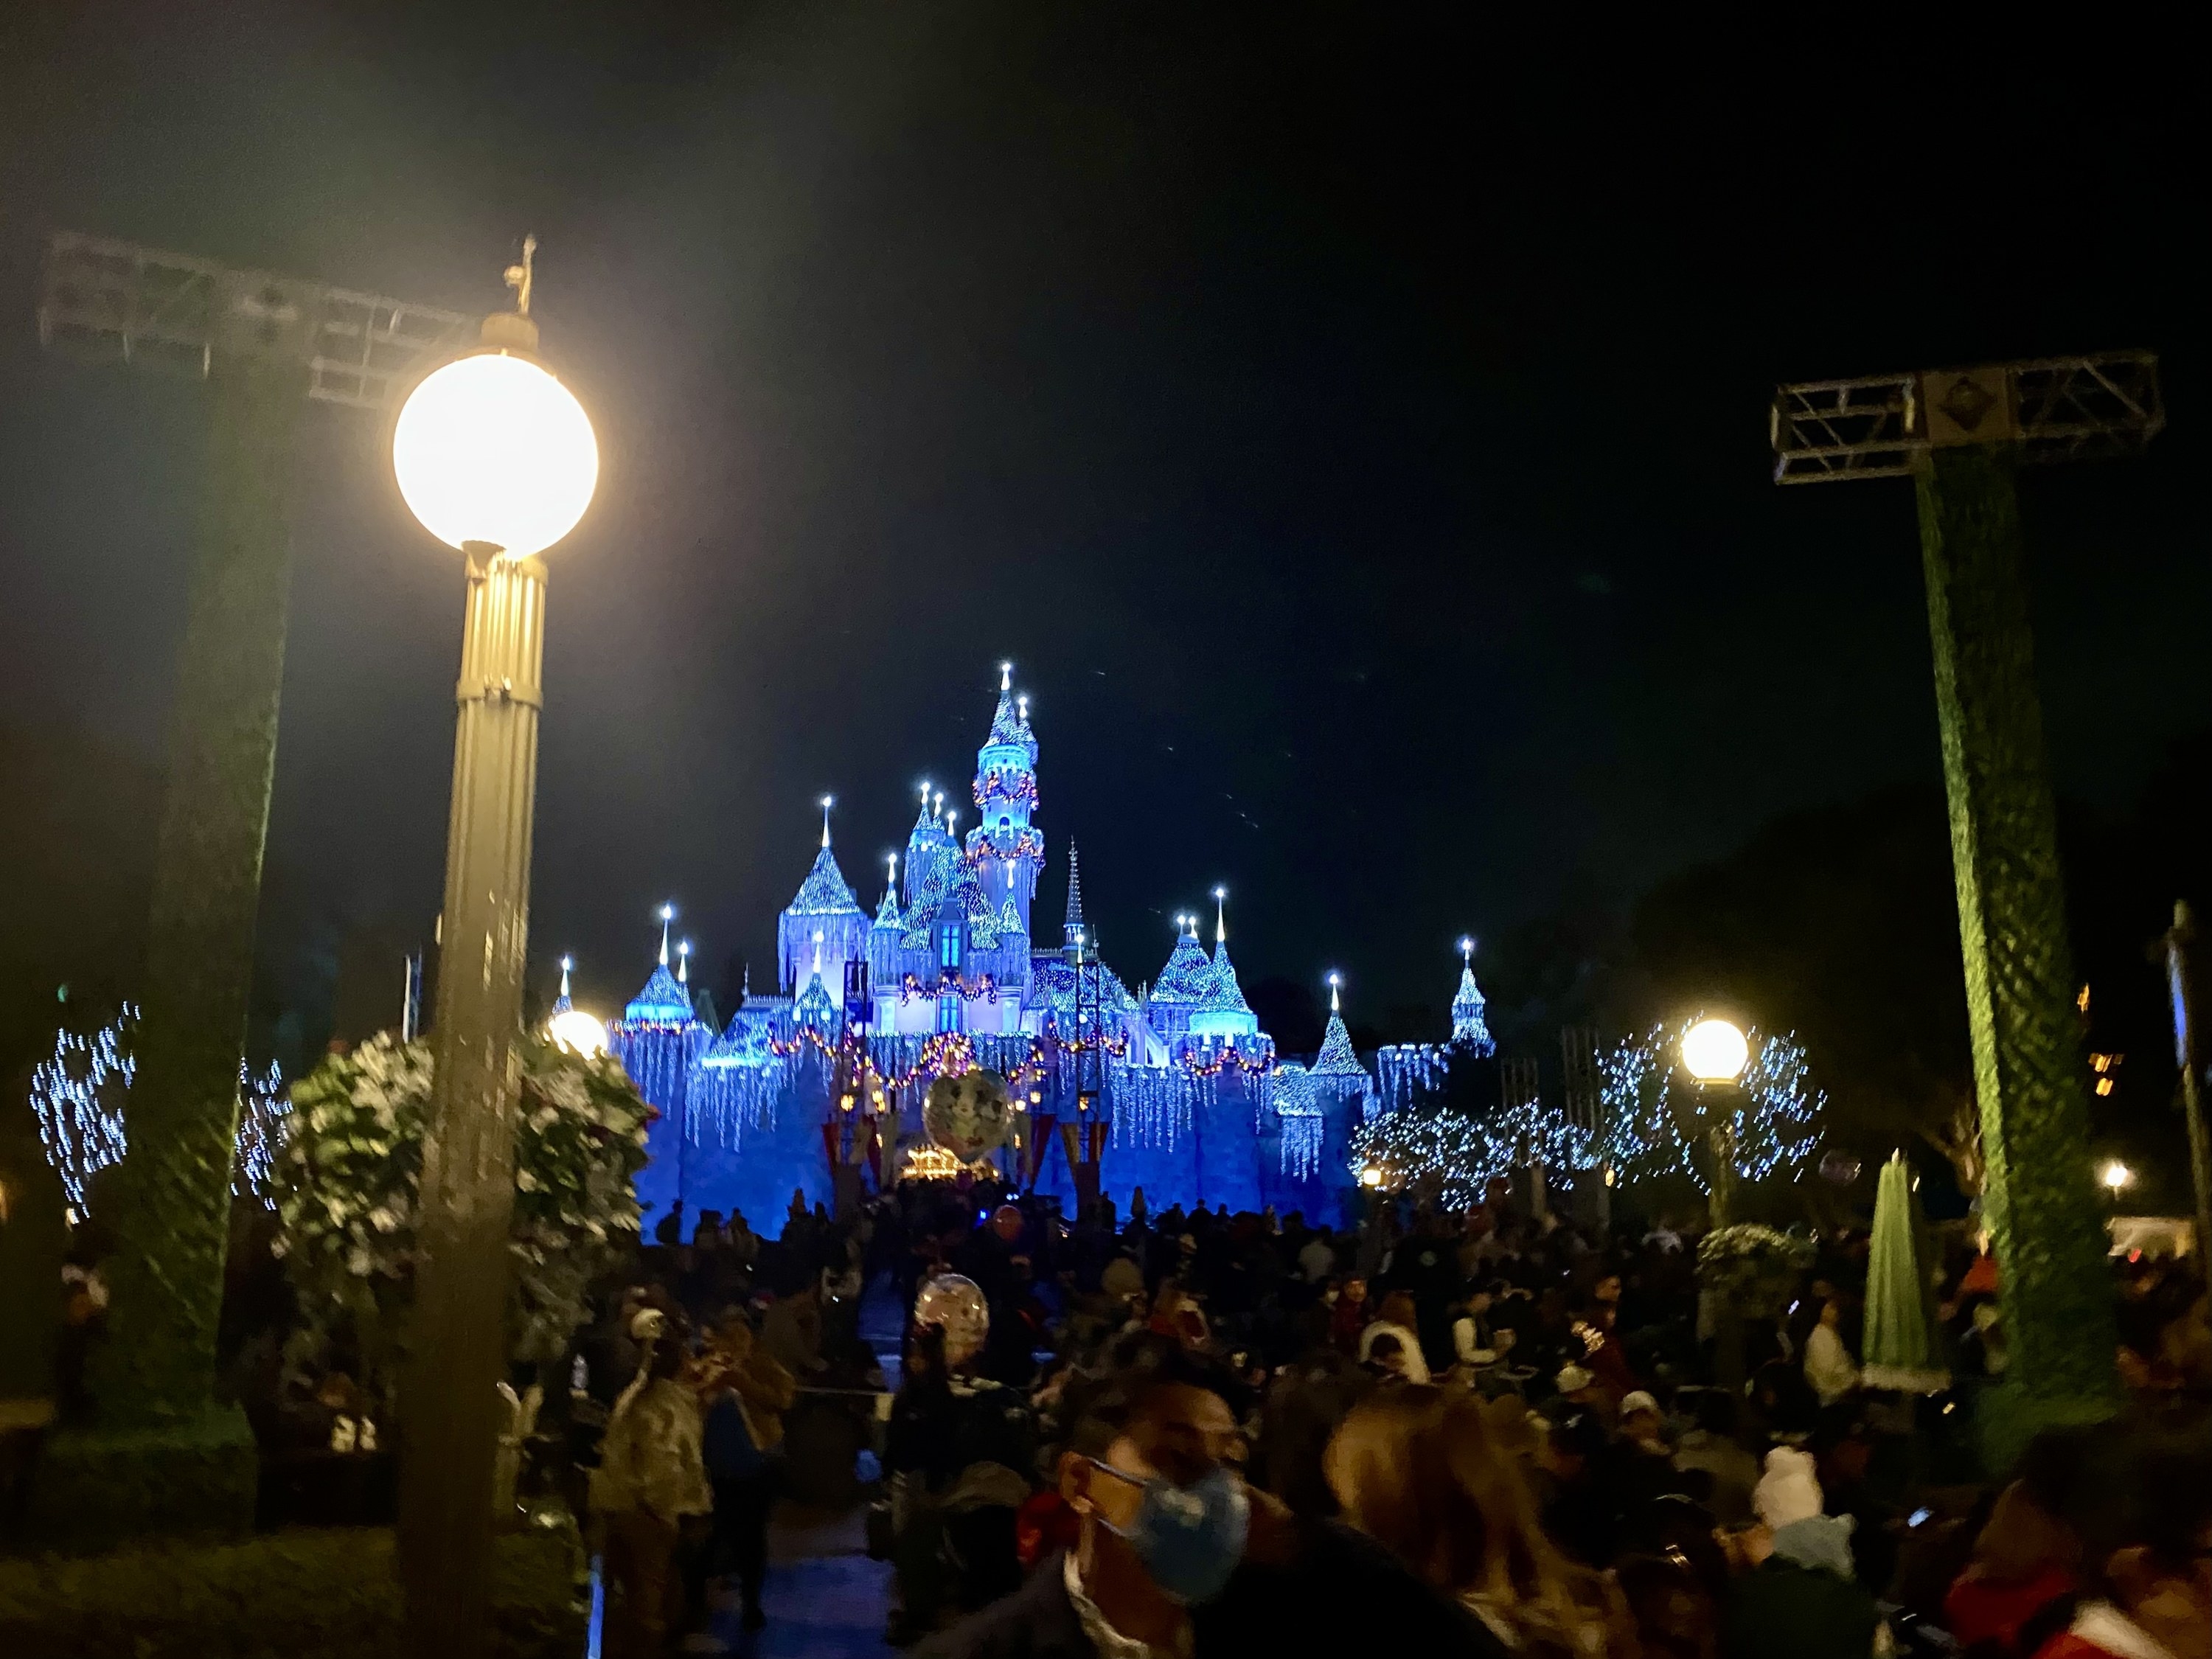 Disneyland lit up